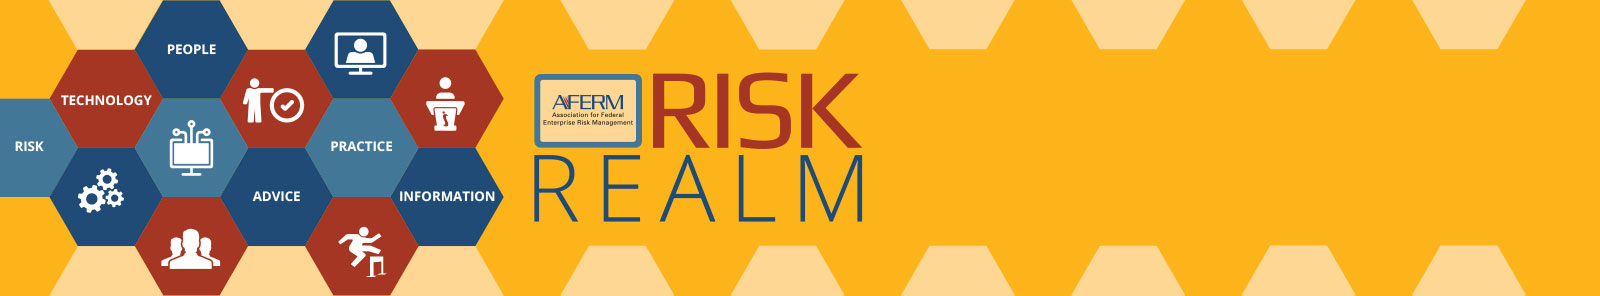 Risk Realm Webinar